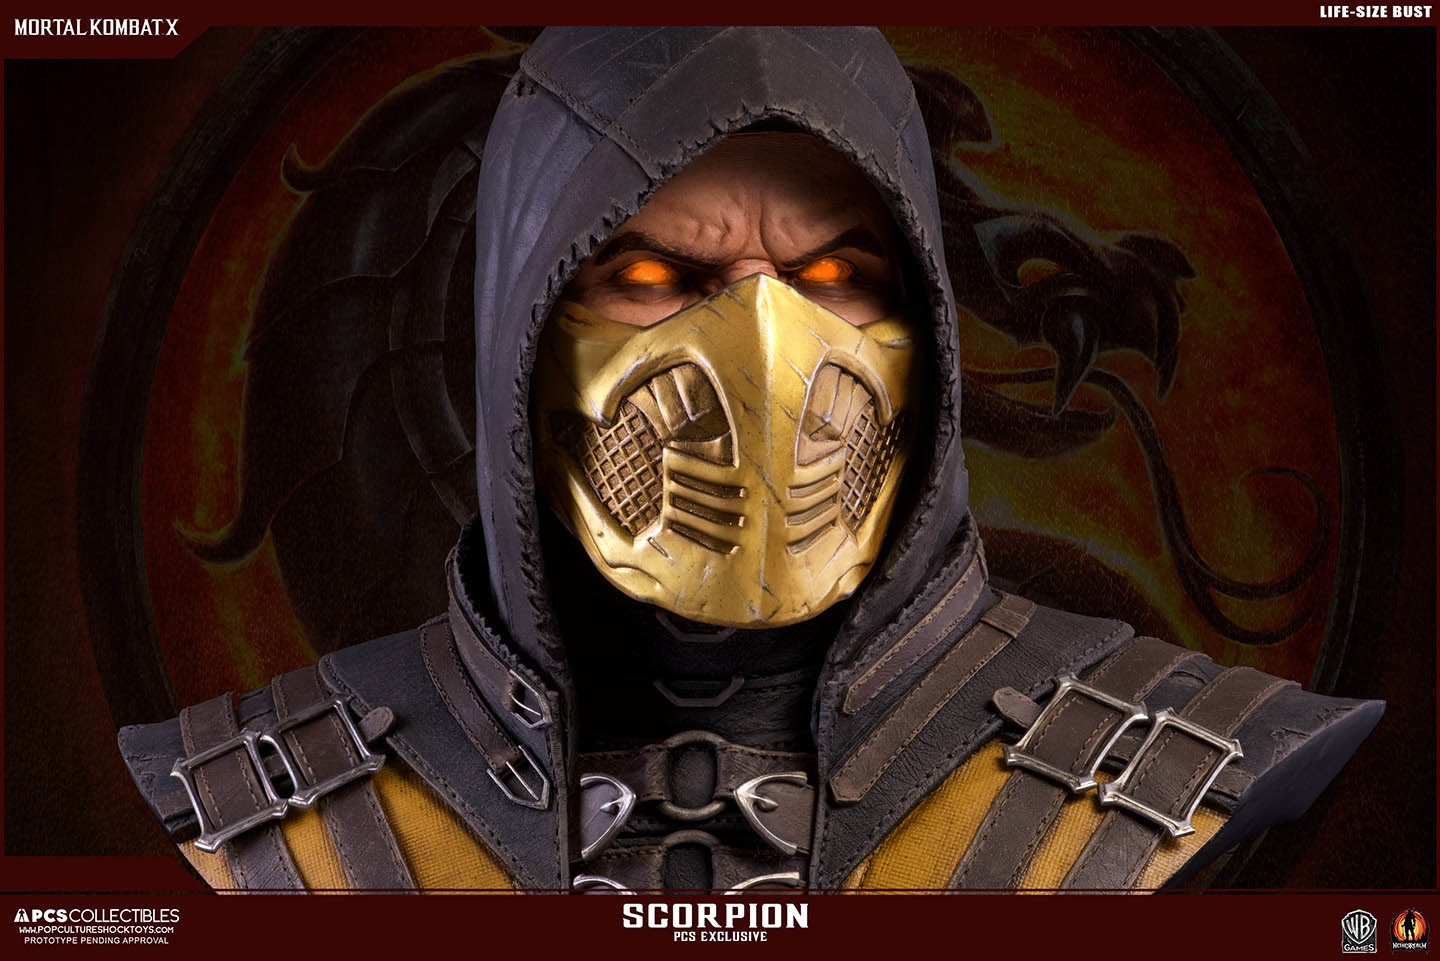 Scorpion-Bust-Pop-culture-Shock-Mortal-Kombat-X-exclusive-002.jpg